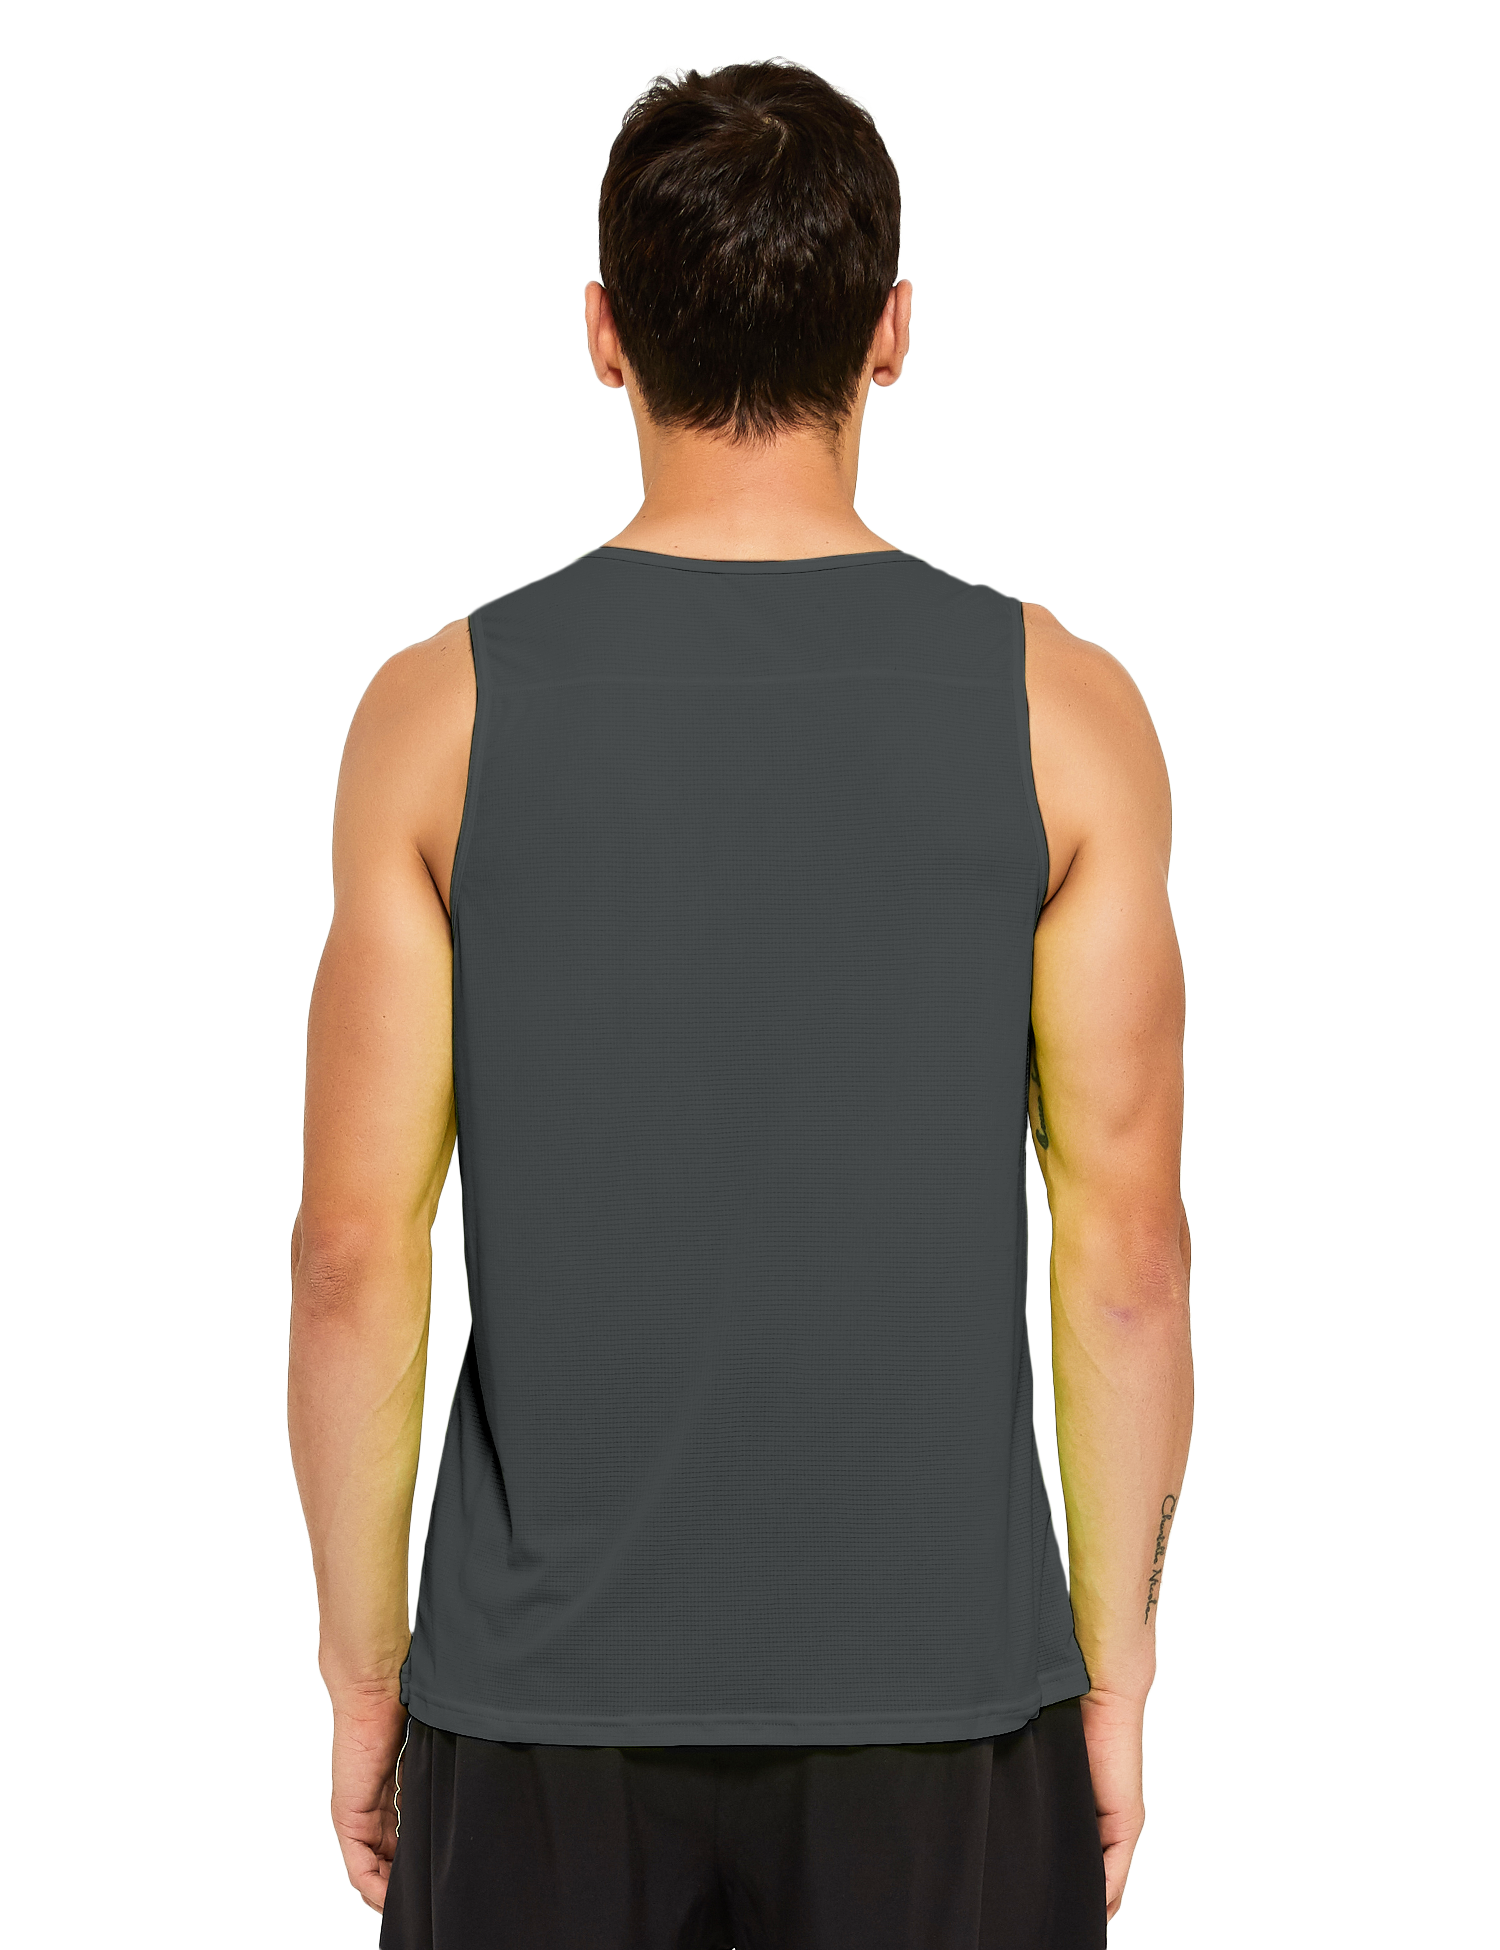  DEMOZU Men's Sleeveless Workout Swim Shirts Quick Dry